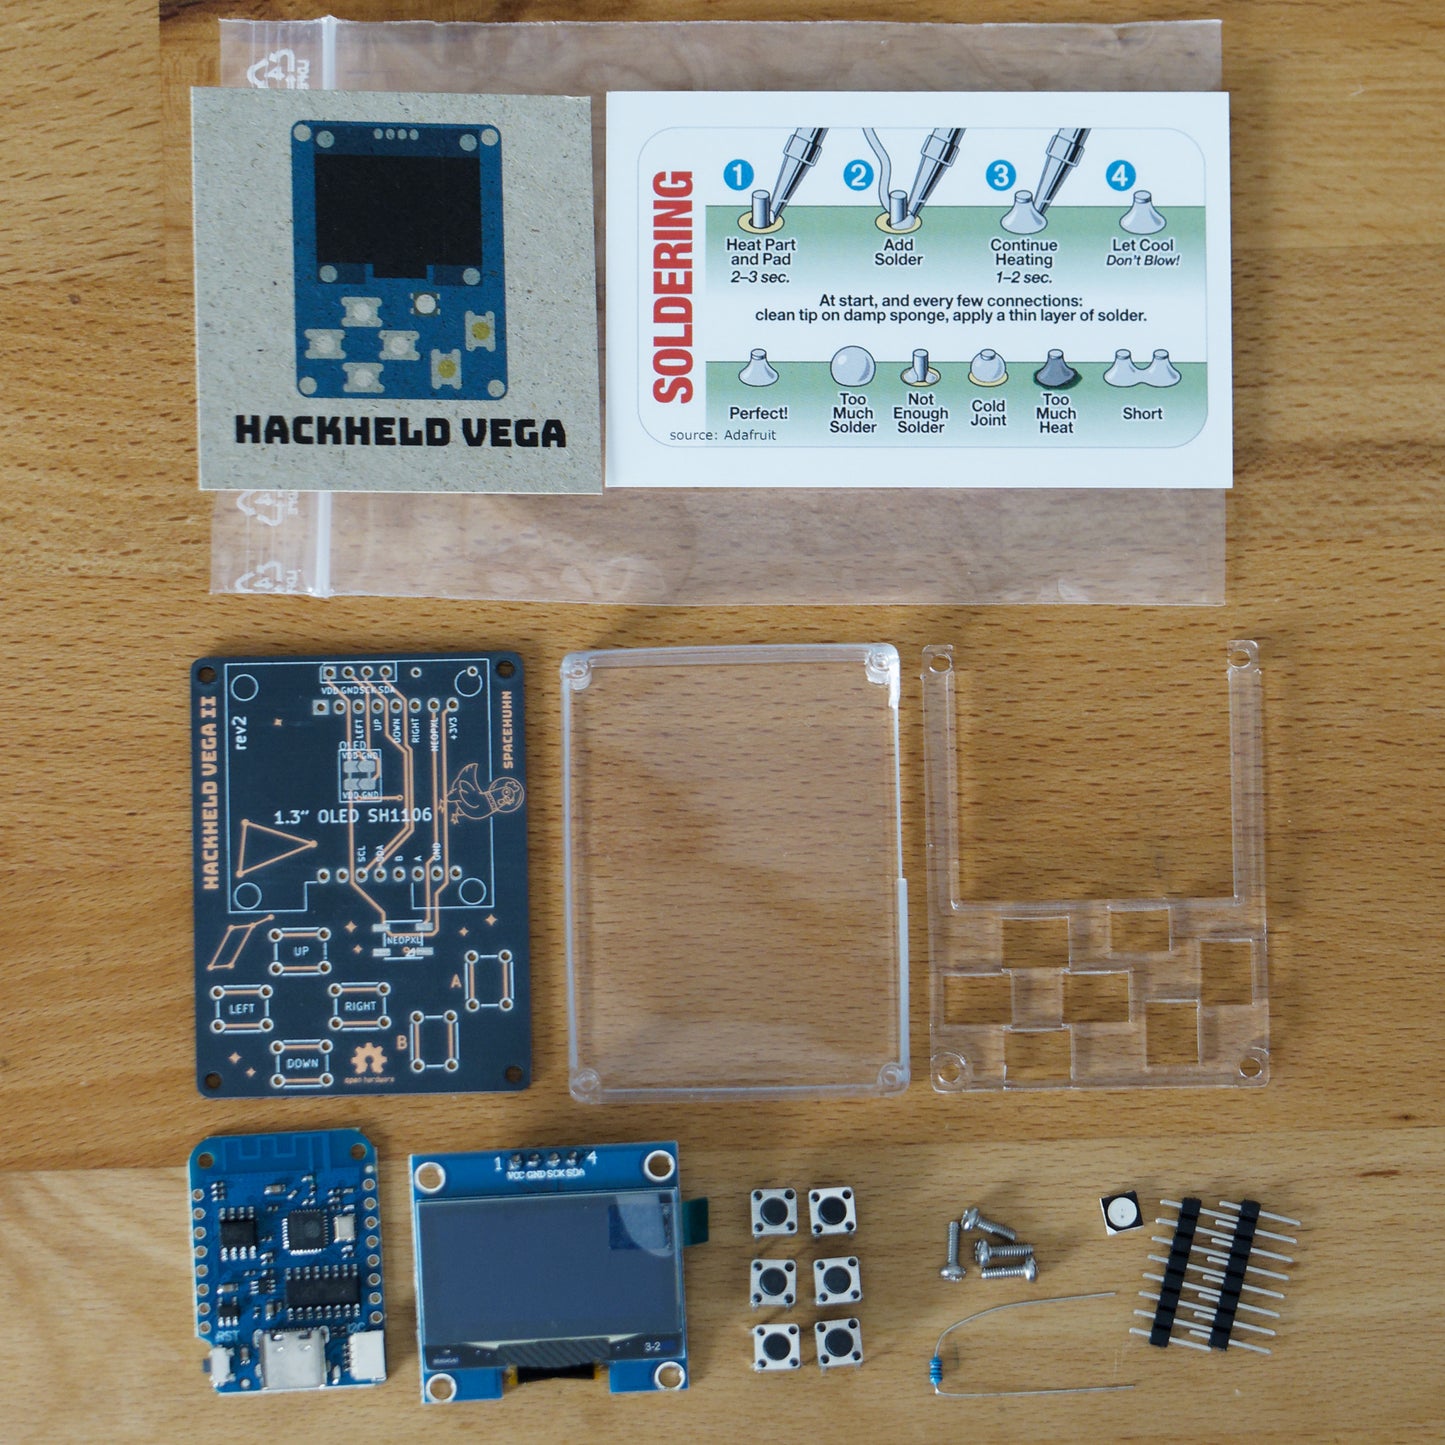 HackHeld Vega II Kit SPECIAL EDITION